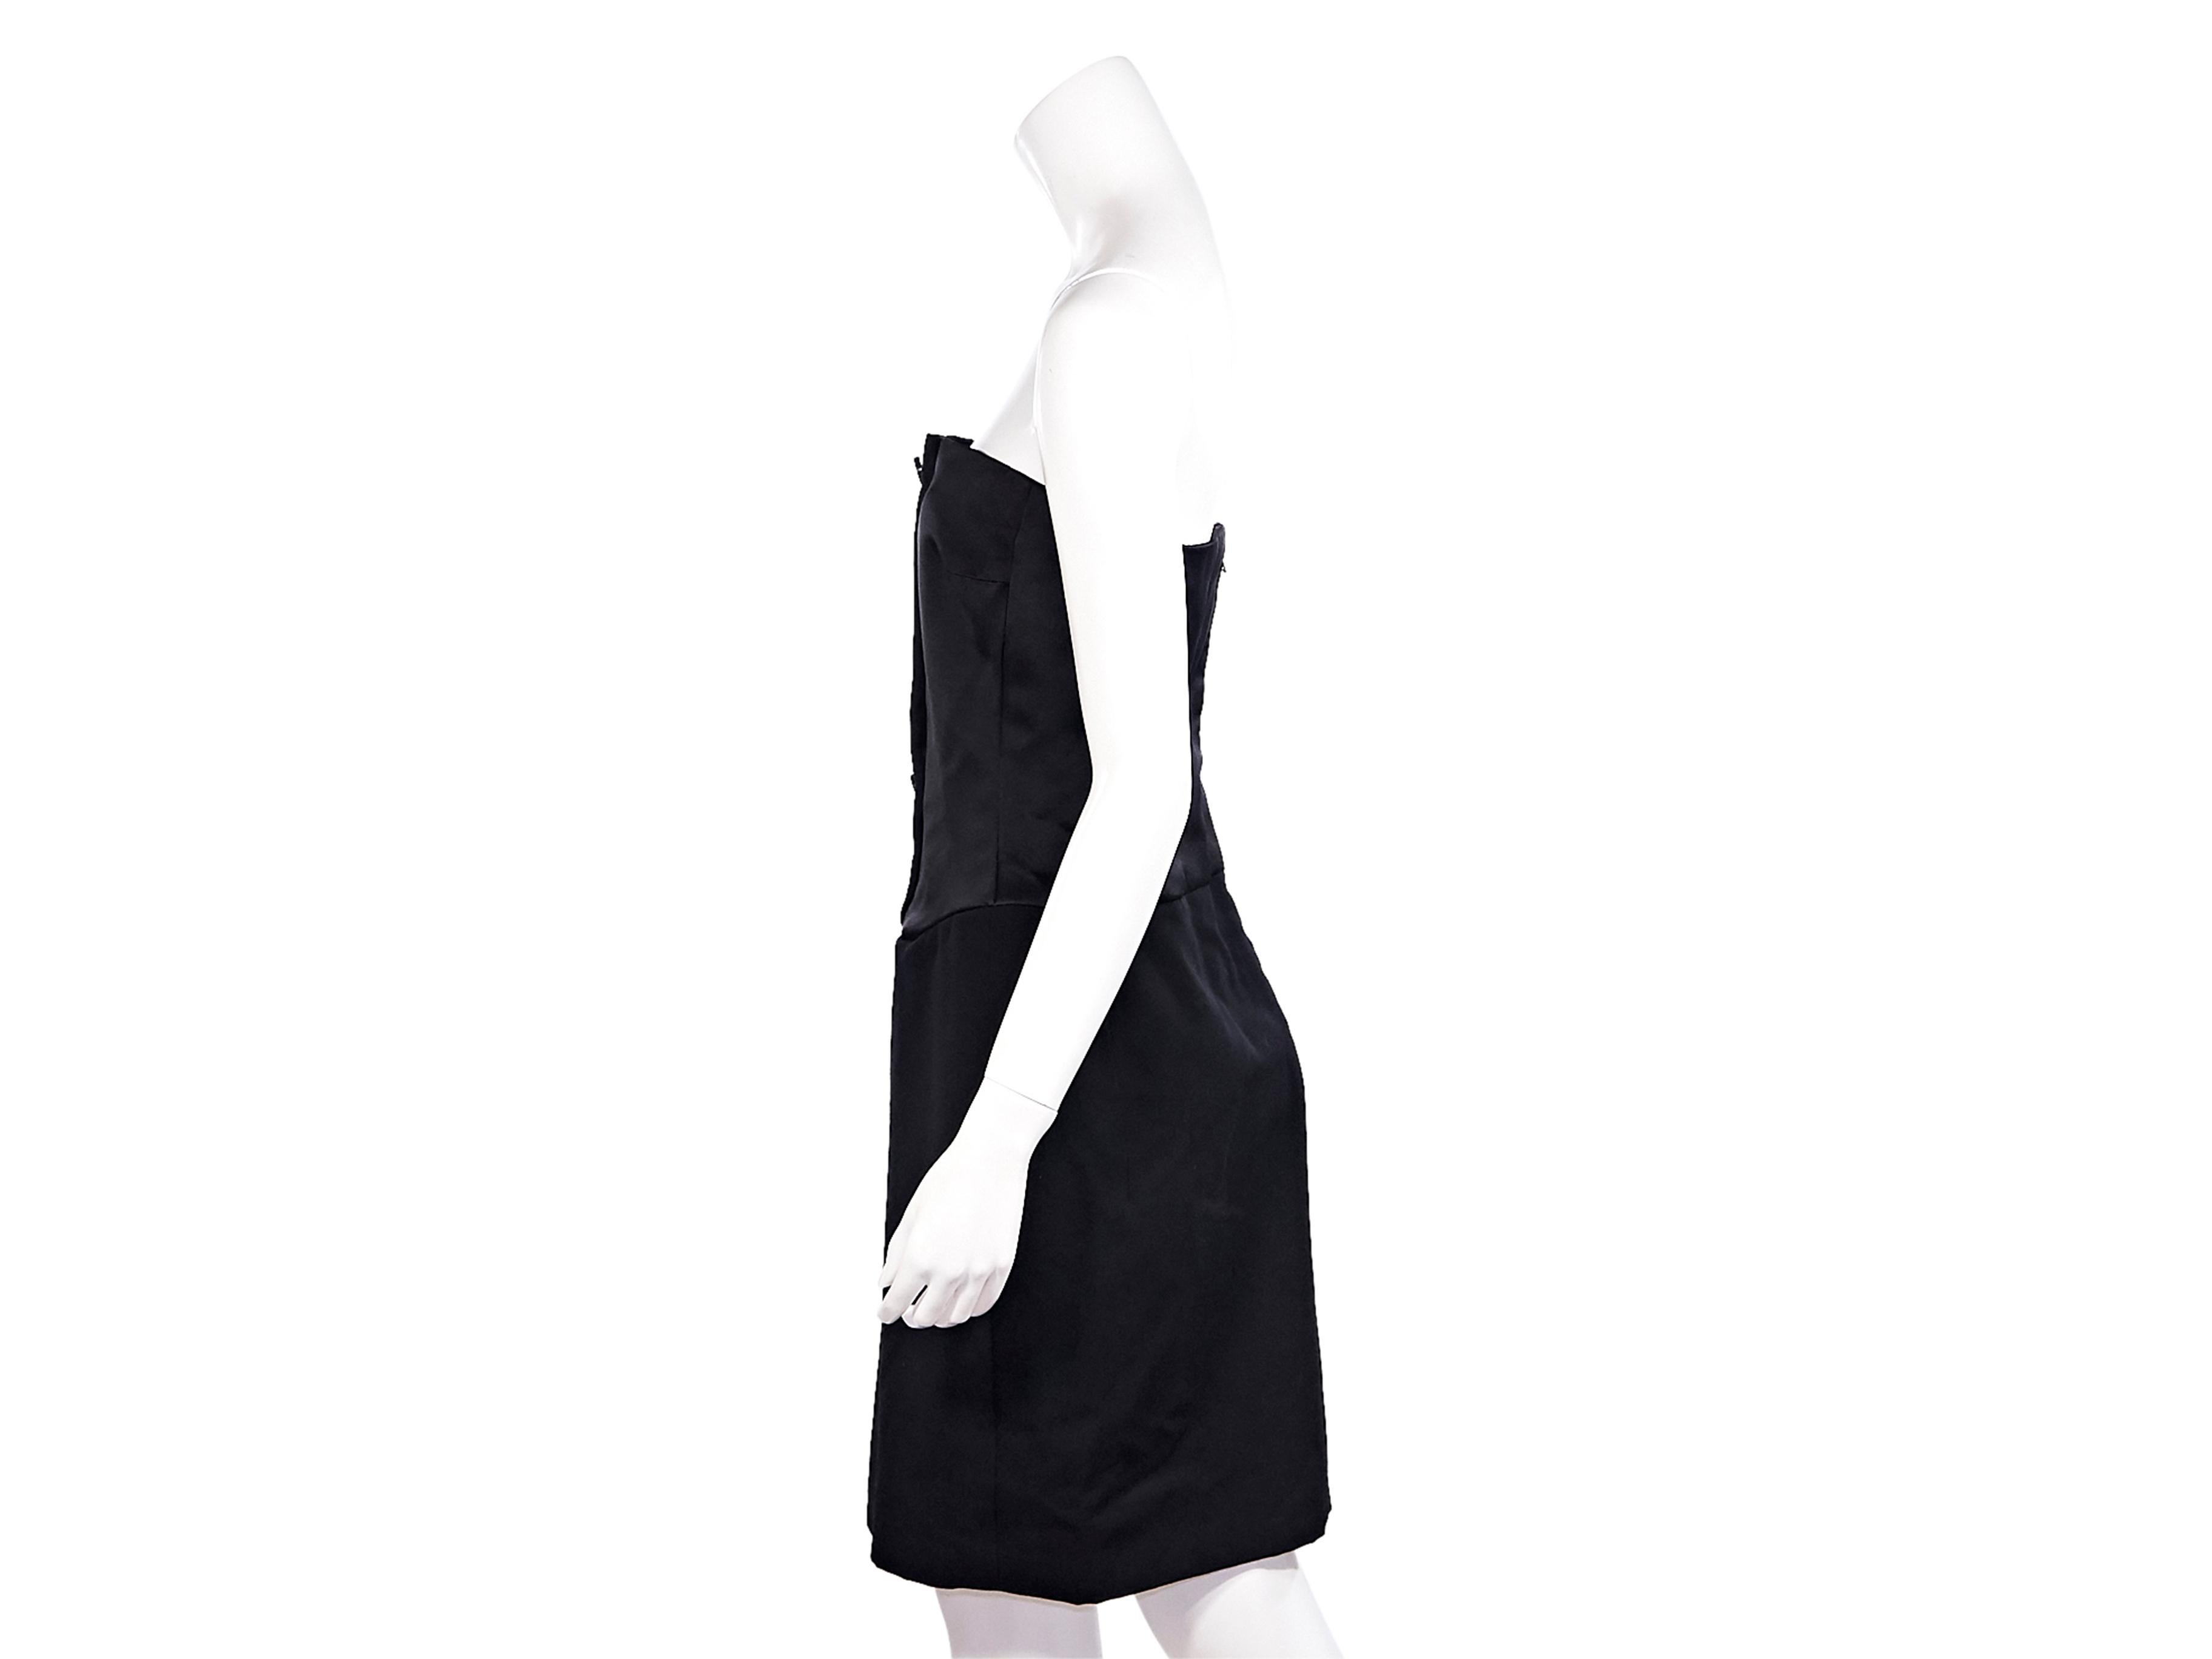 Product details:  Vintage black strapless satin dress by Jacqueline de Ribes.  Double button accents at bodice.  Concealed back zip closure.  30